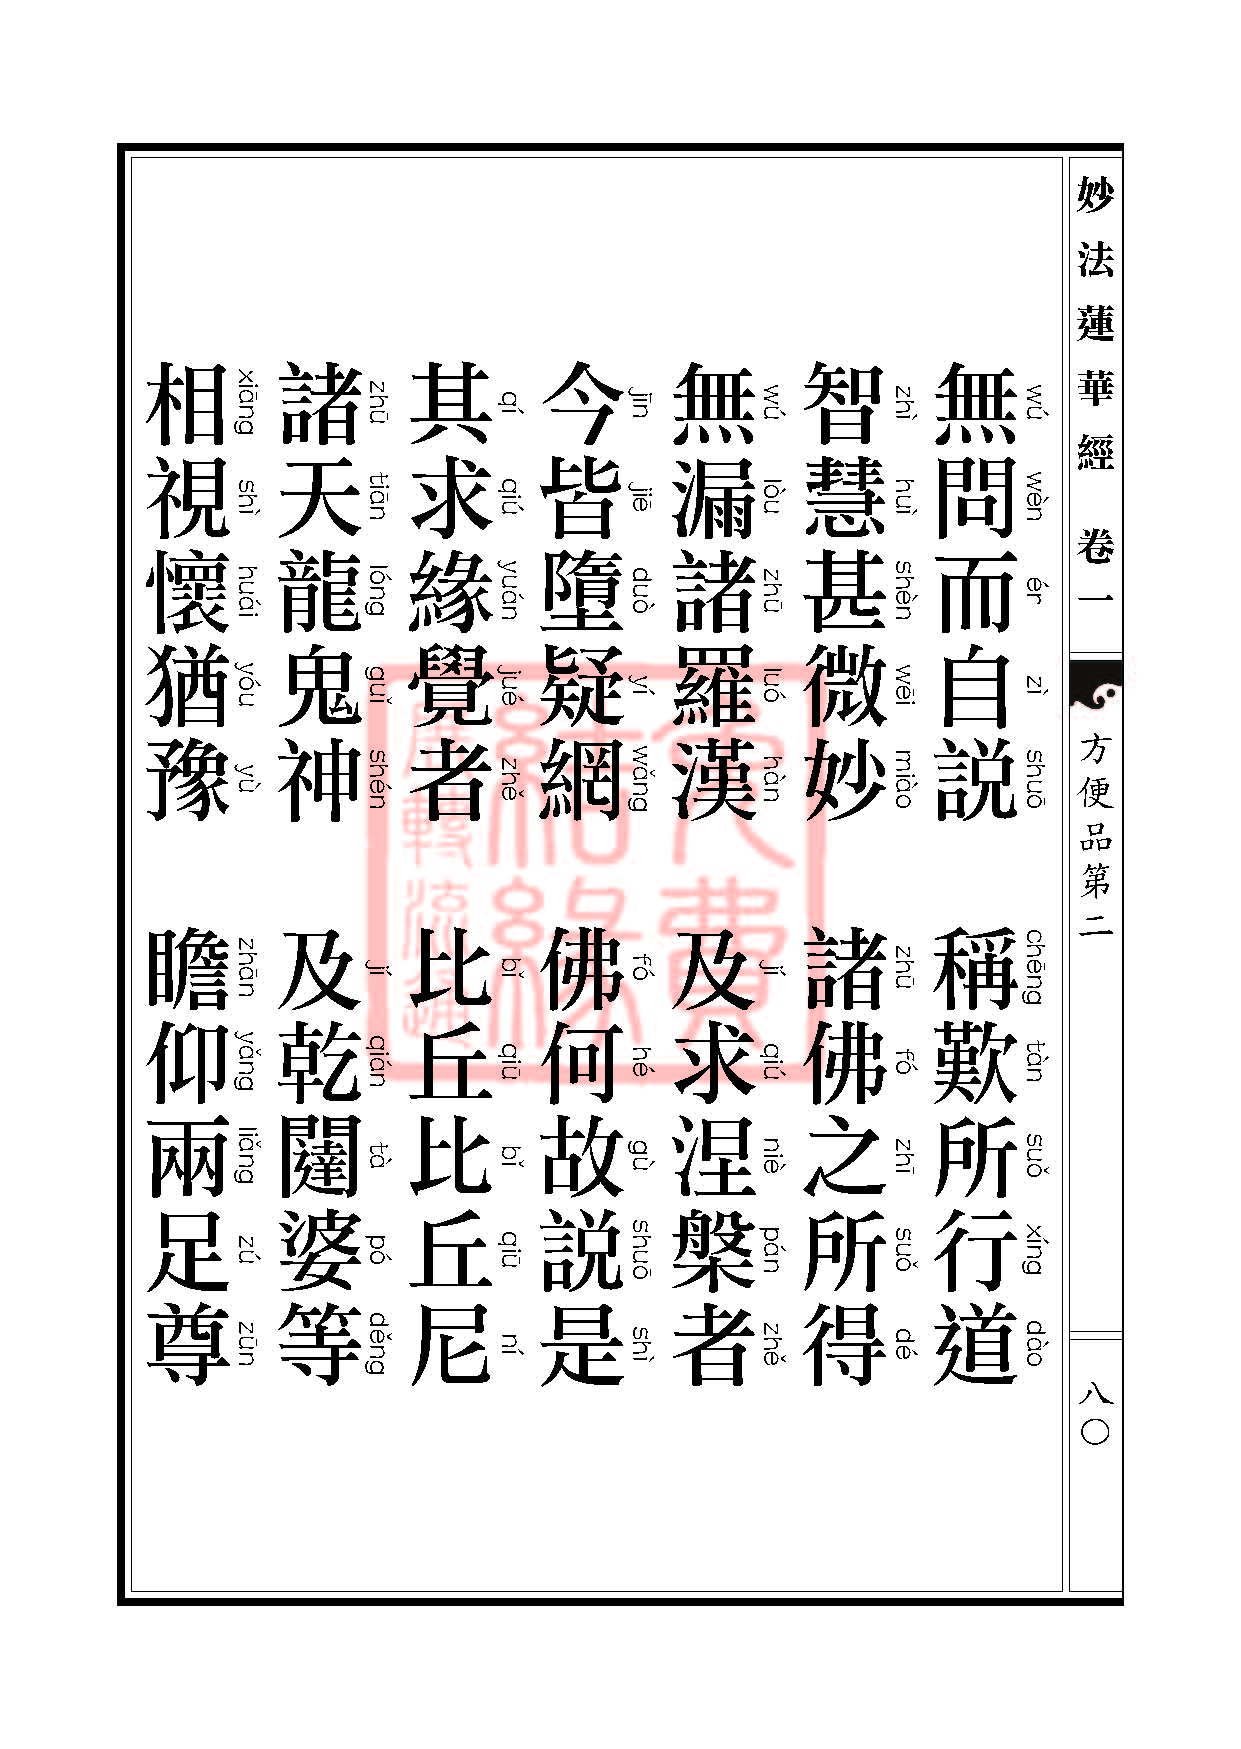 Book_FHJ_HK-A6-PY_Web_ҳ_080.jpg